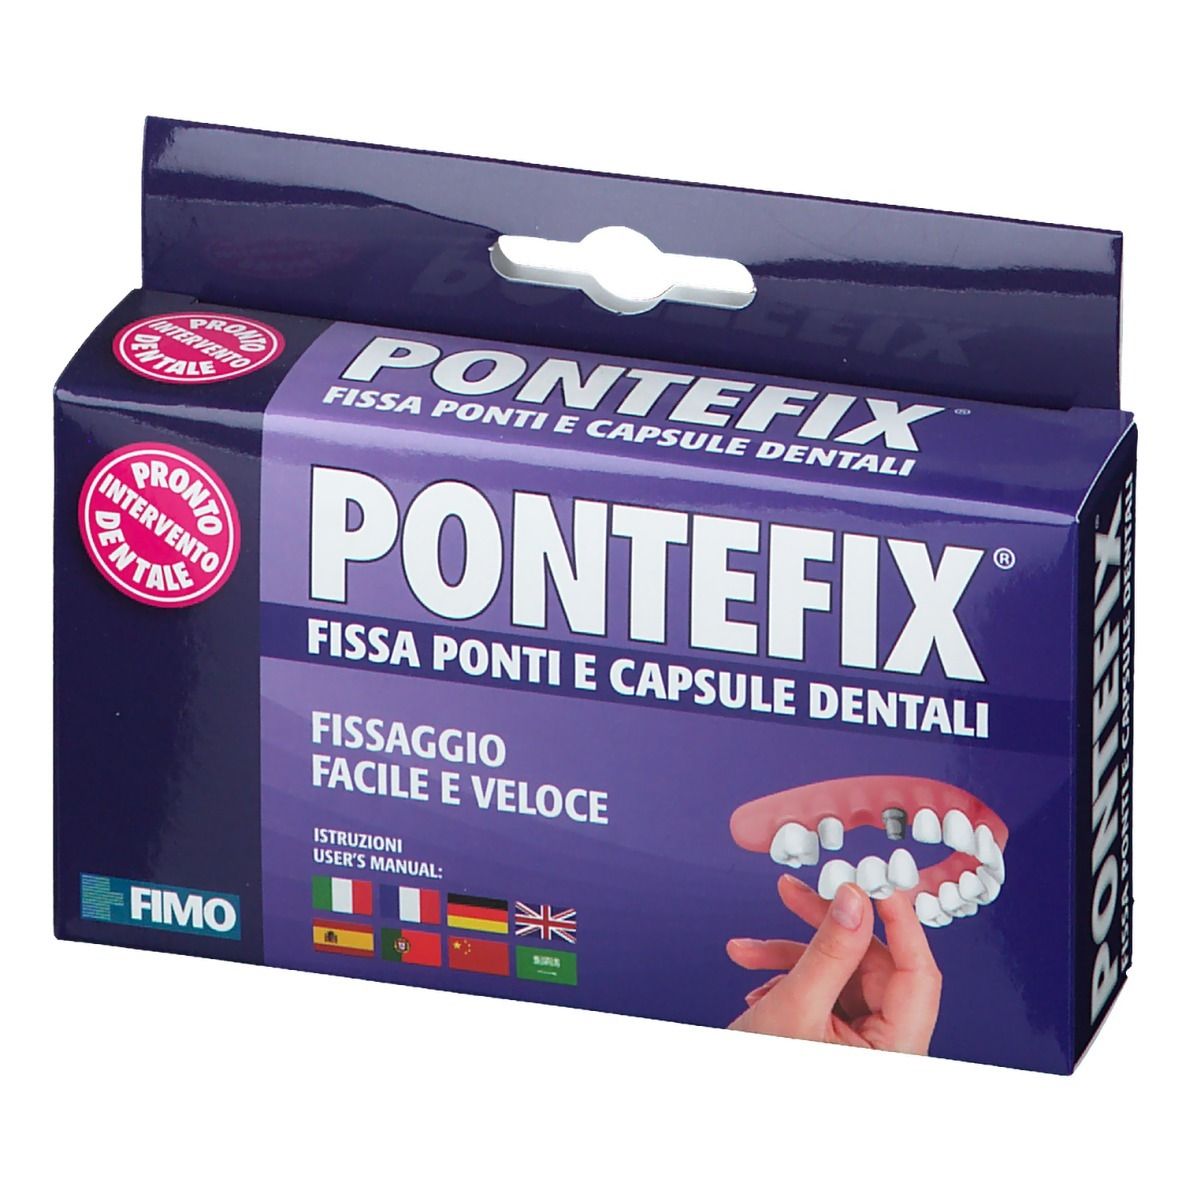 Pontefix® Fissa Ponti e Capsule Dentali Kit Completo